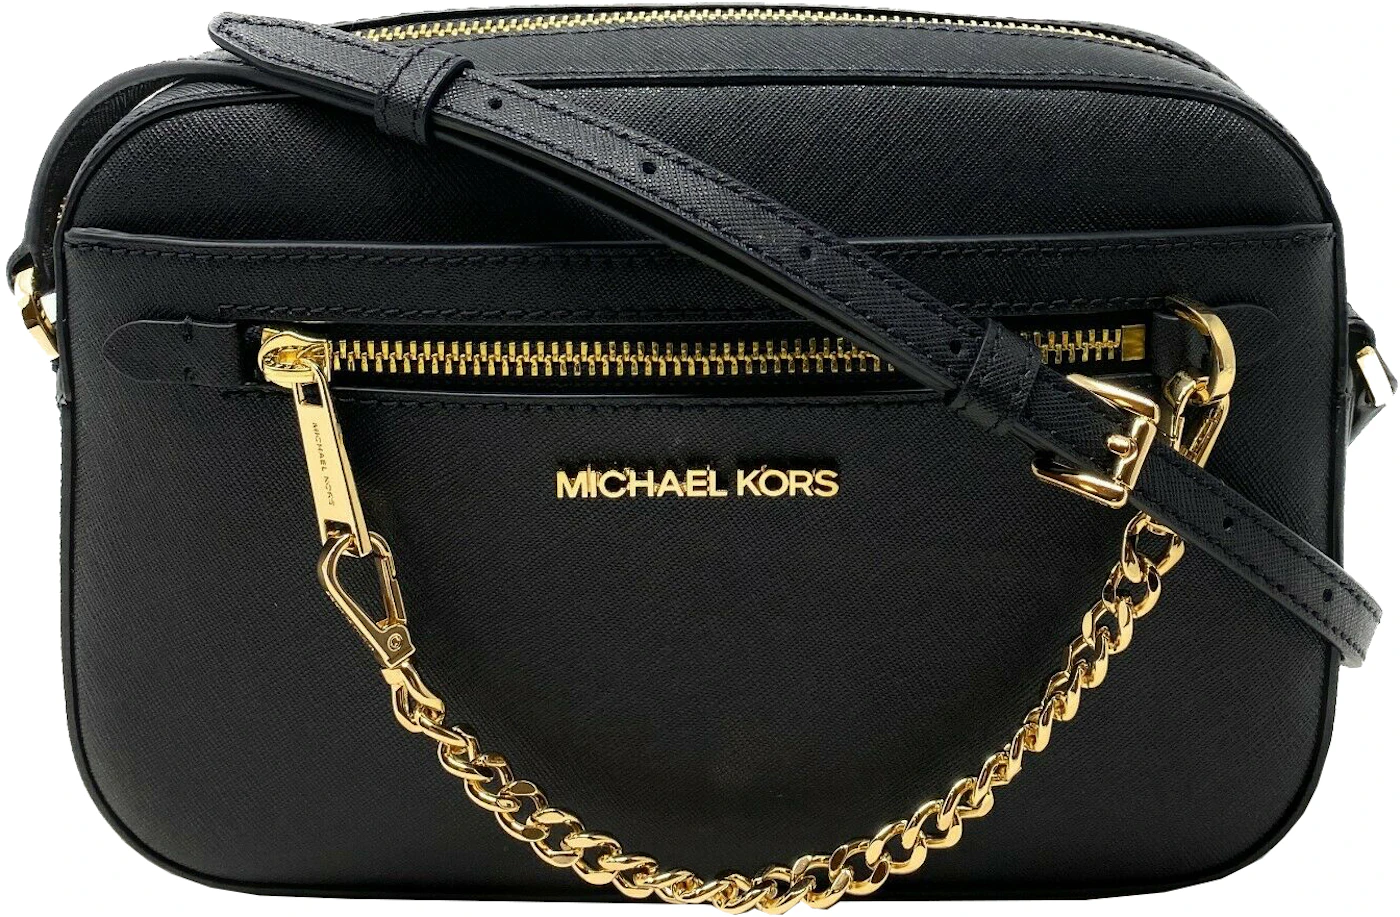 Michael Kors Jet Set Item Crossbody Bag Saffiano Leather Black Gold